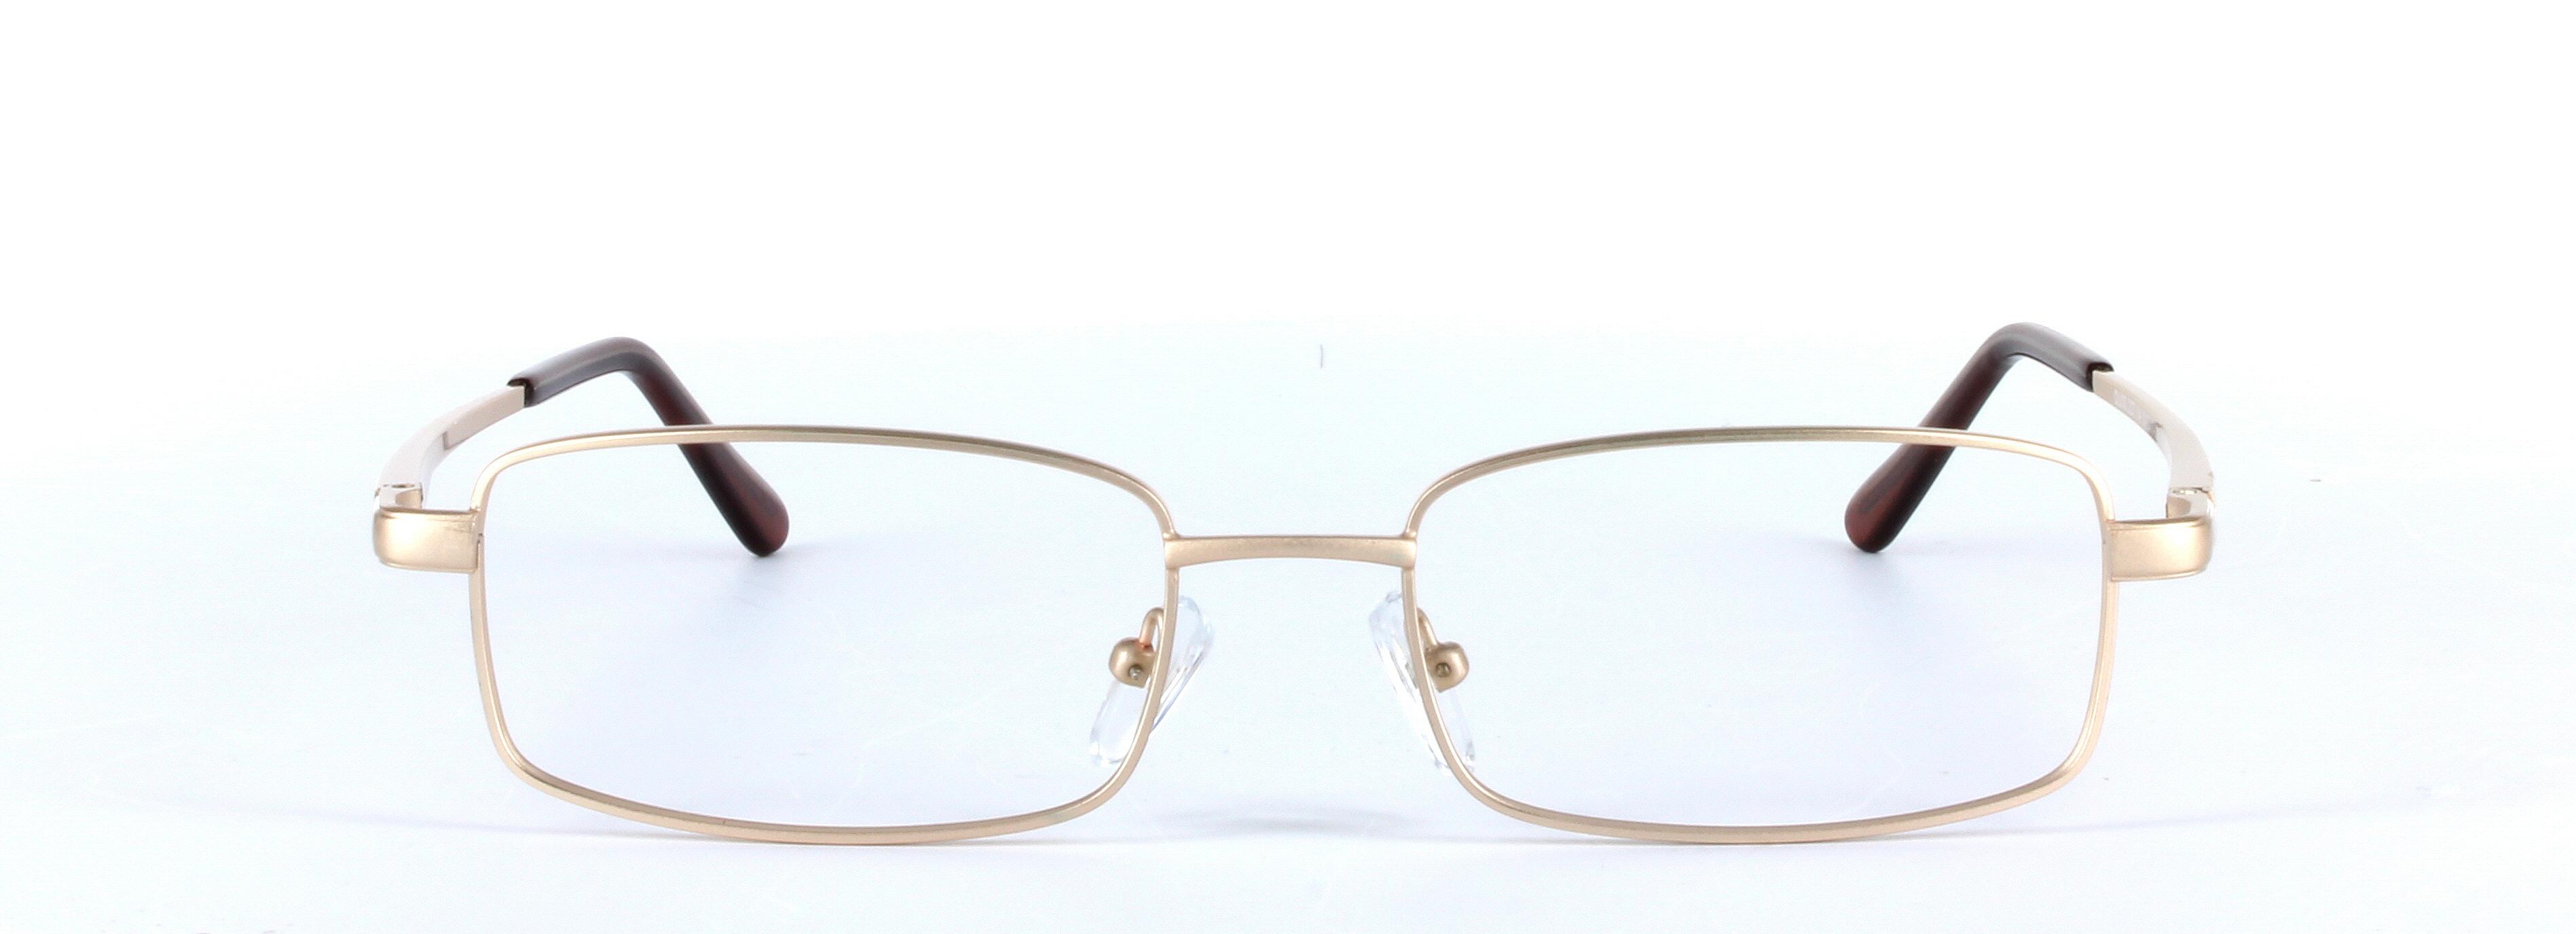 Kristo Gold Full Rim Rectangular Metal Glasses - Image View 5